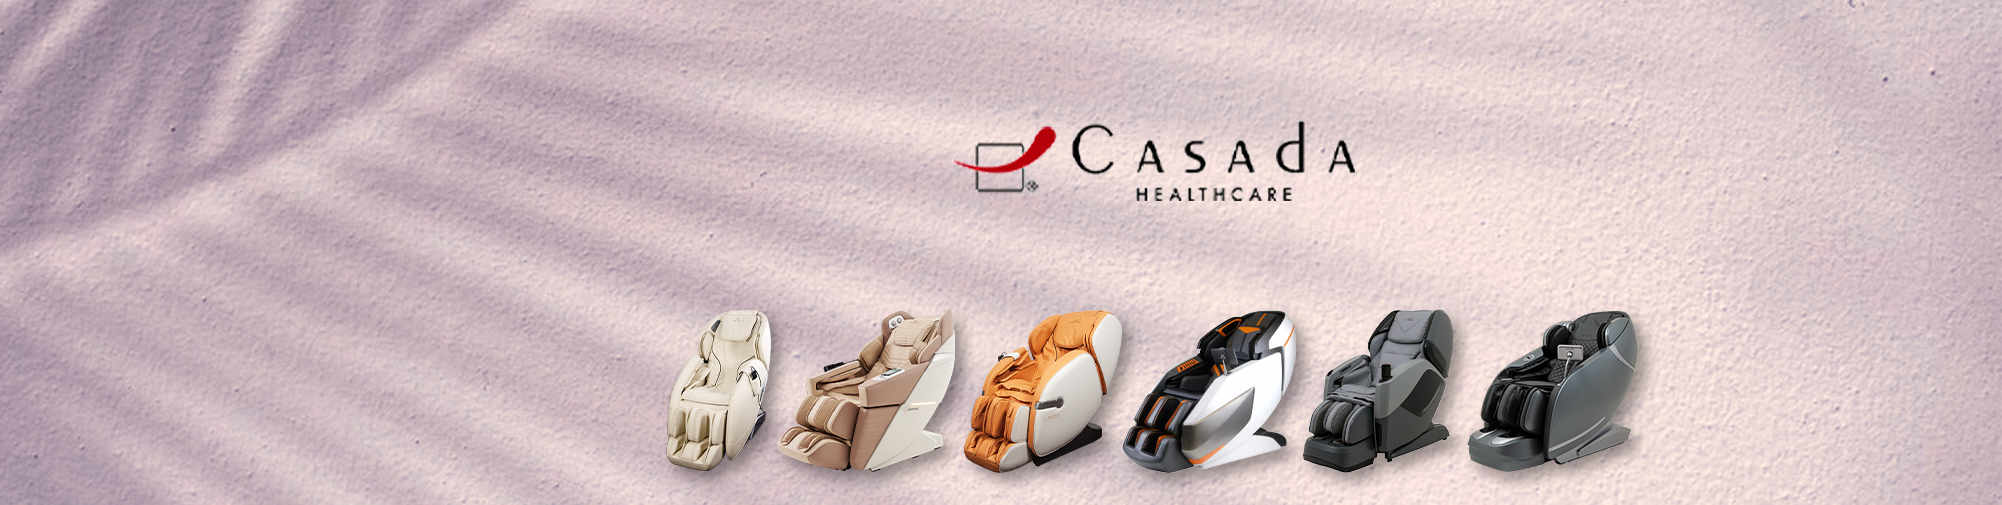 Casada - надежден партньор | Massage Chair World